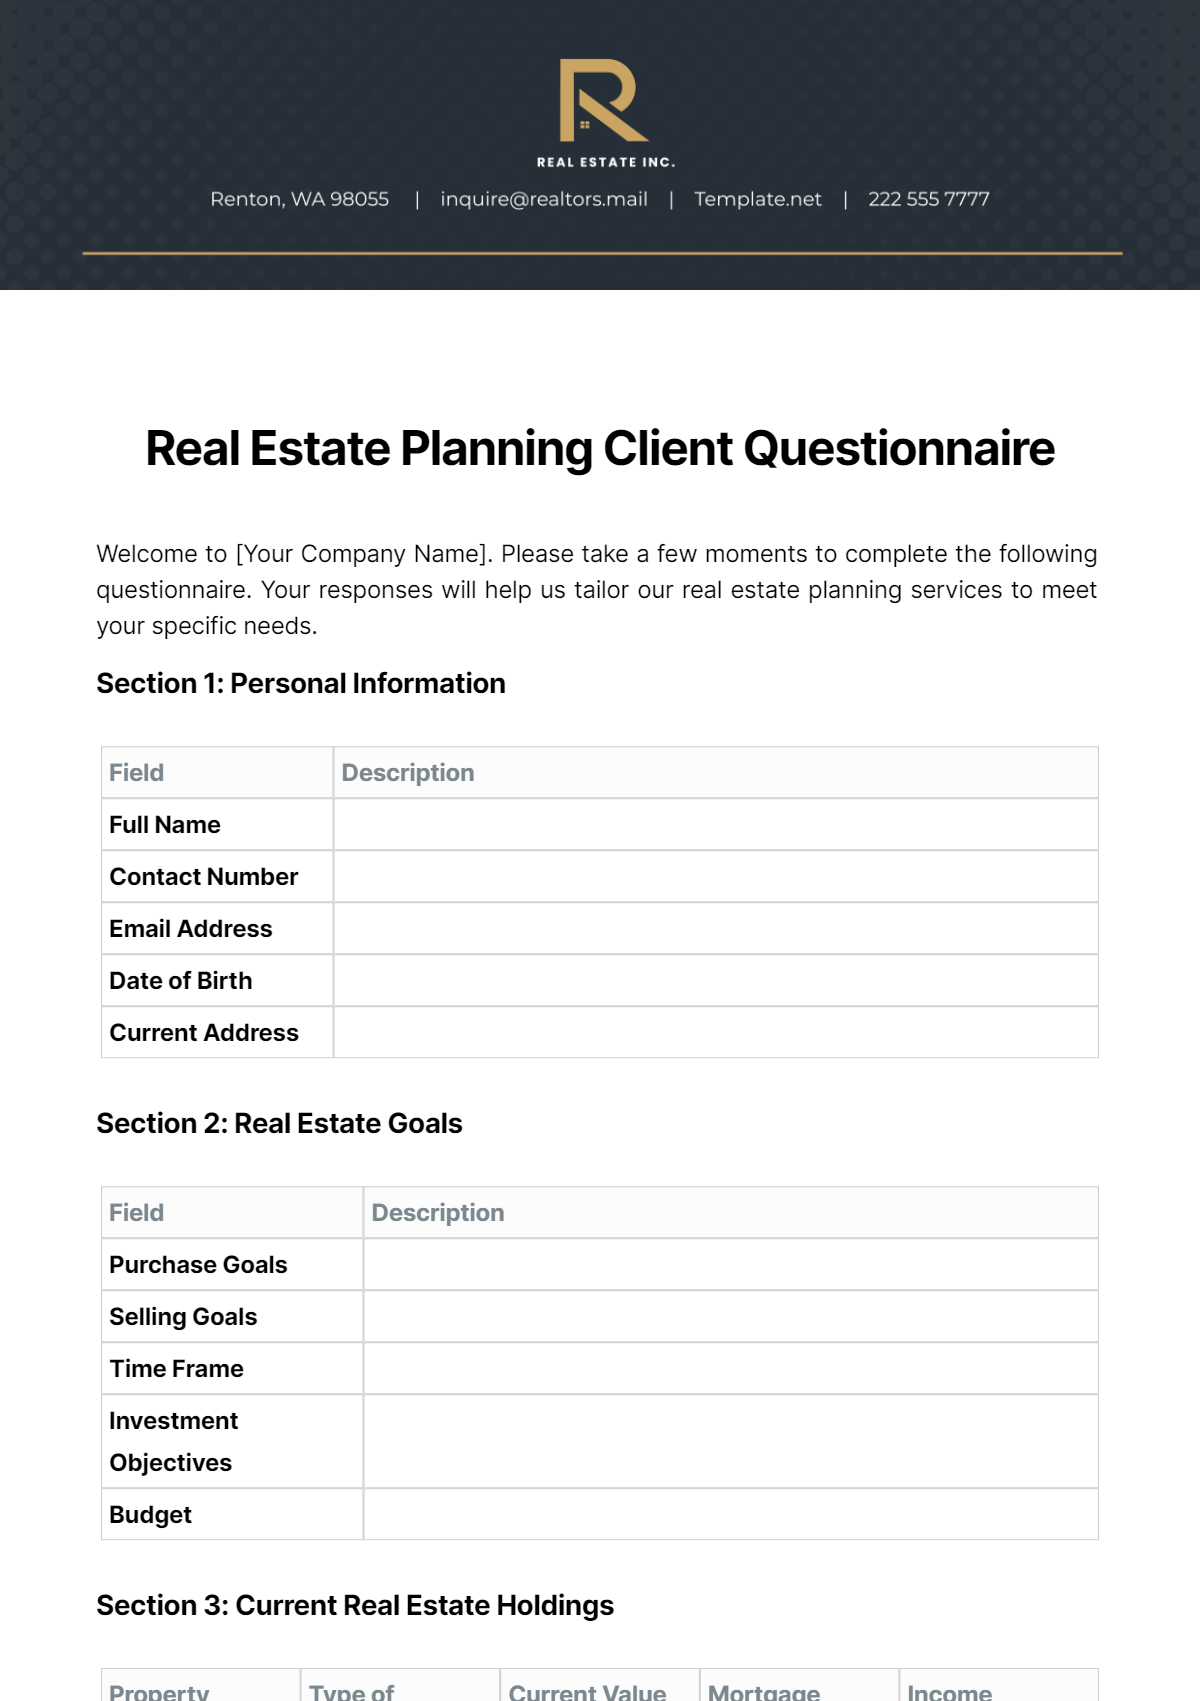 Real Estate Planning Client Questionnaire Template